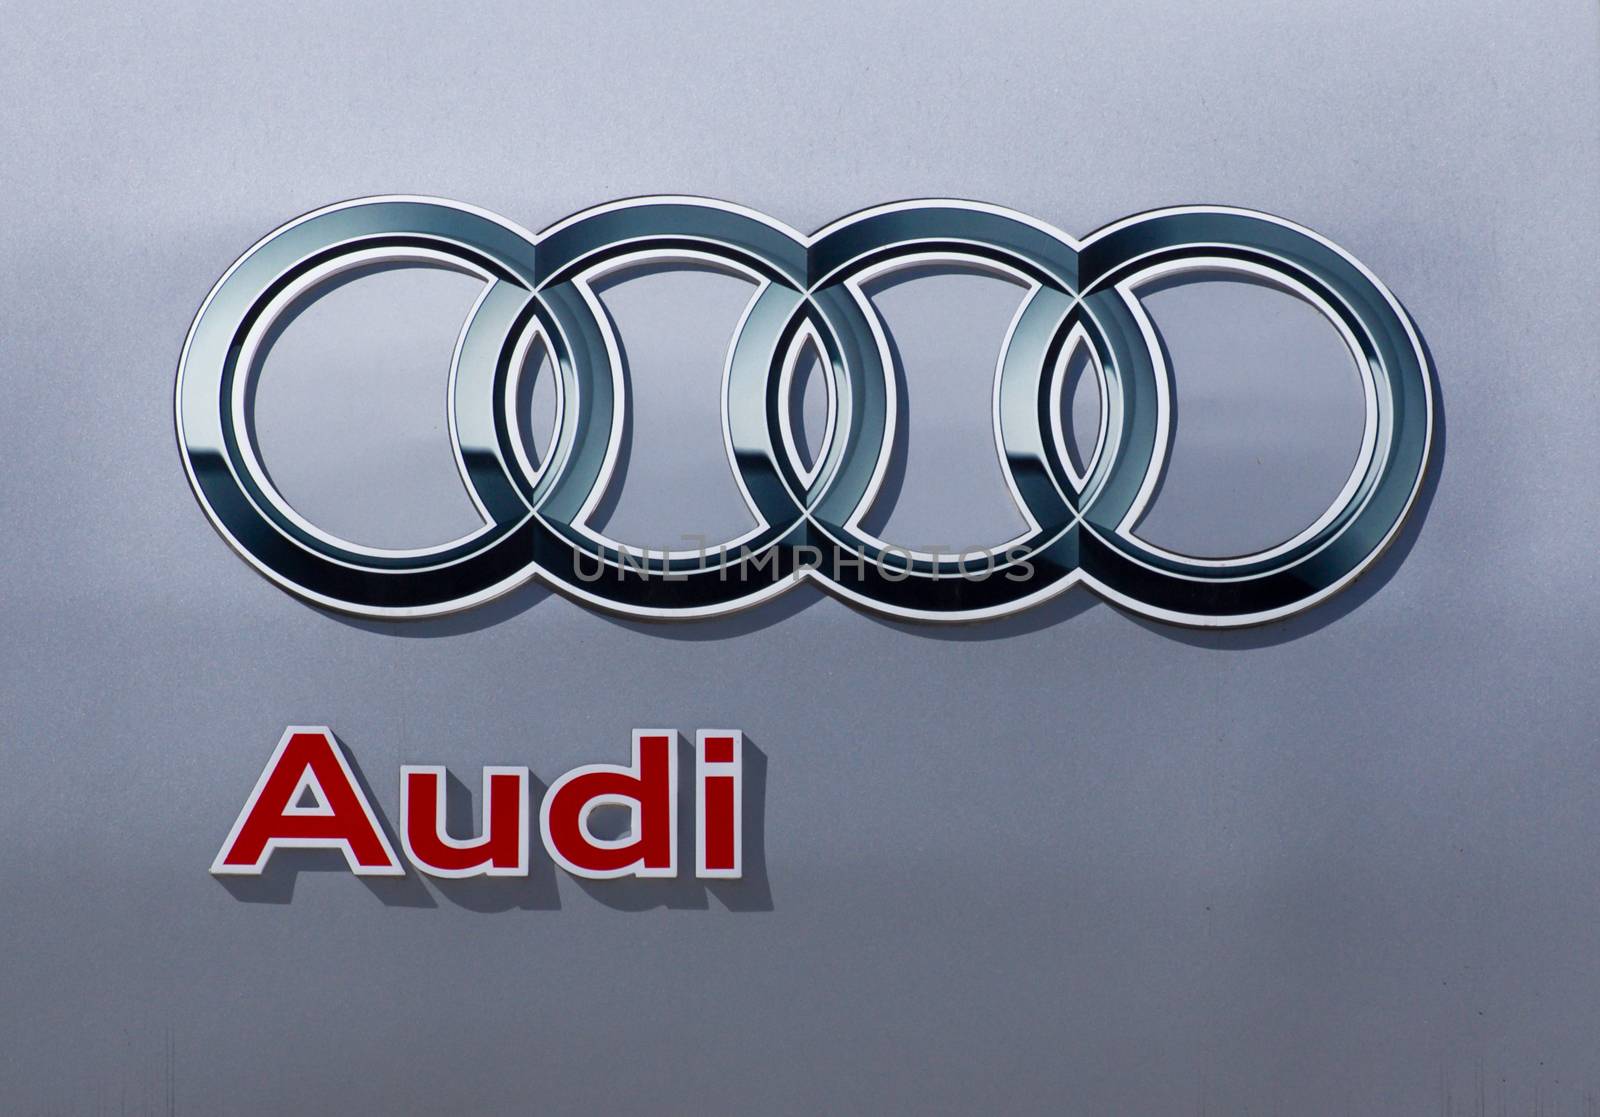 Audi Automobile Dealership Logo by wolterk